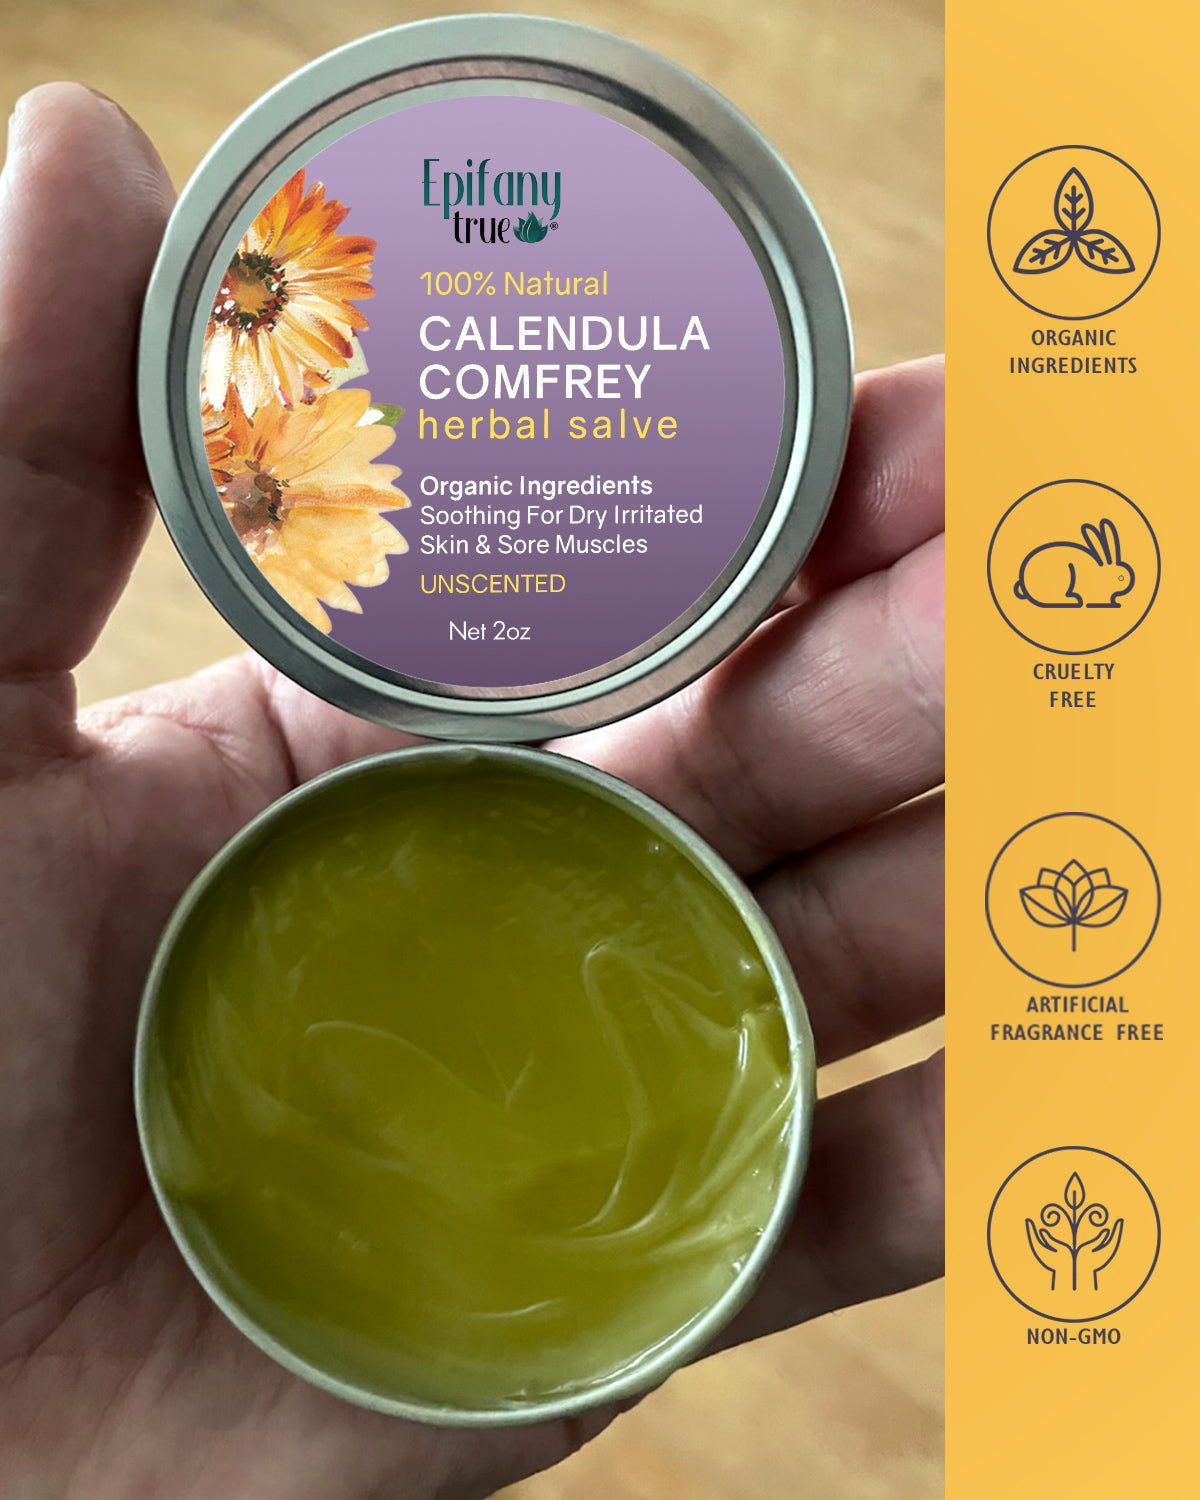 Epifany True Calendula Comfrey Herbal Salve 2oz lifestyle hand holding tin